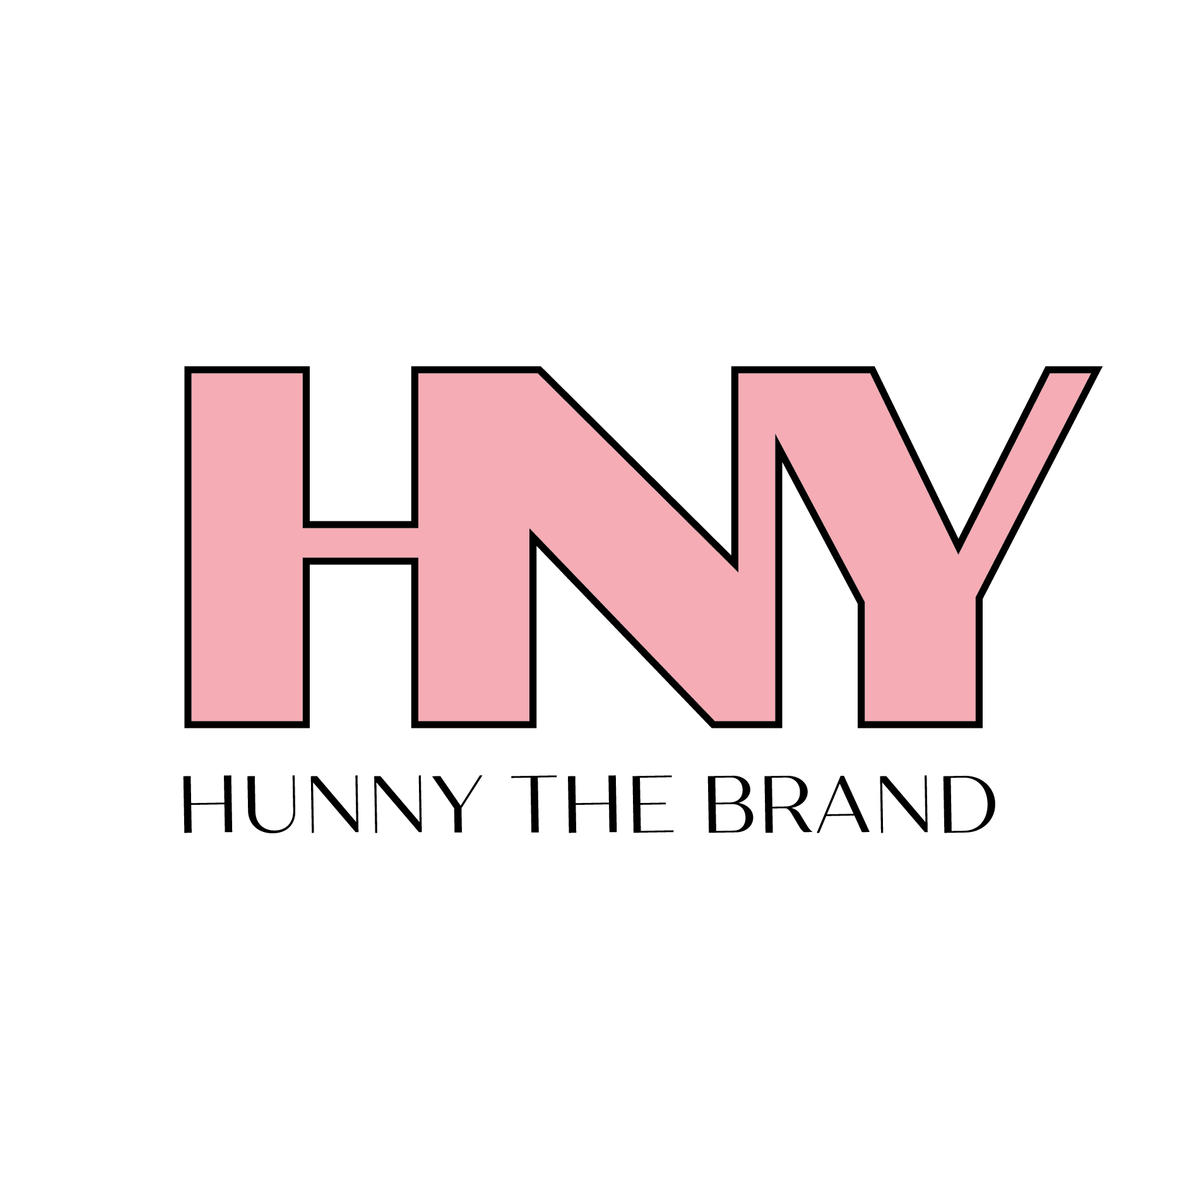 Hunny the Brand